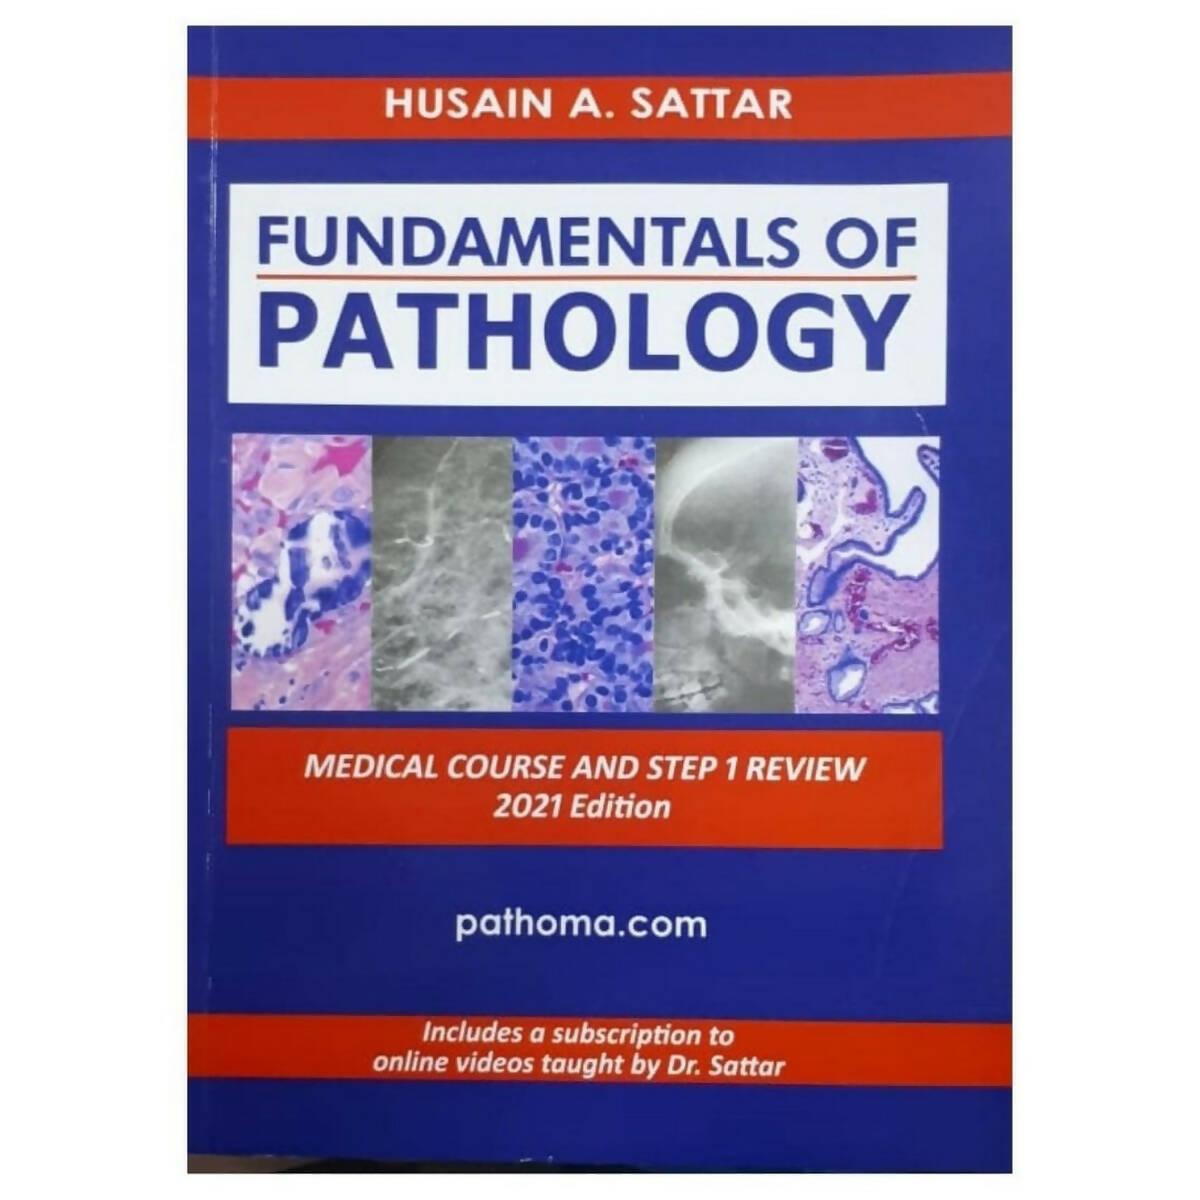 Fundamentals of Pathology 2022 EDITION by HUSAIN A. SATTAR - ValueBox